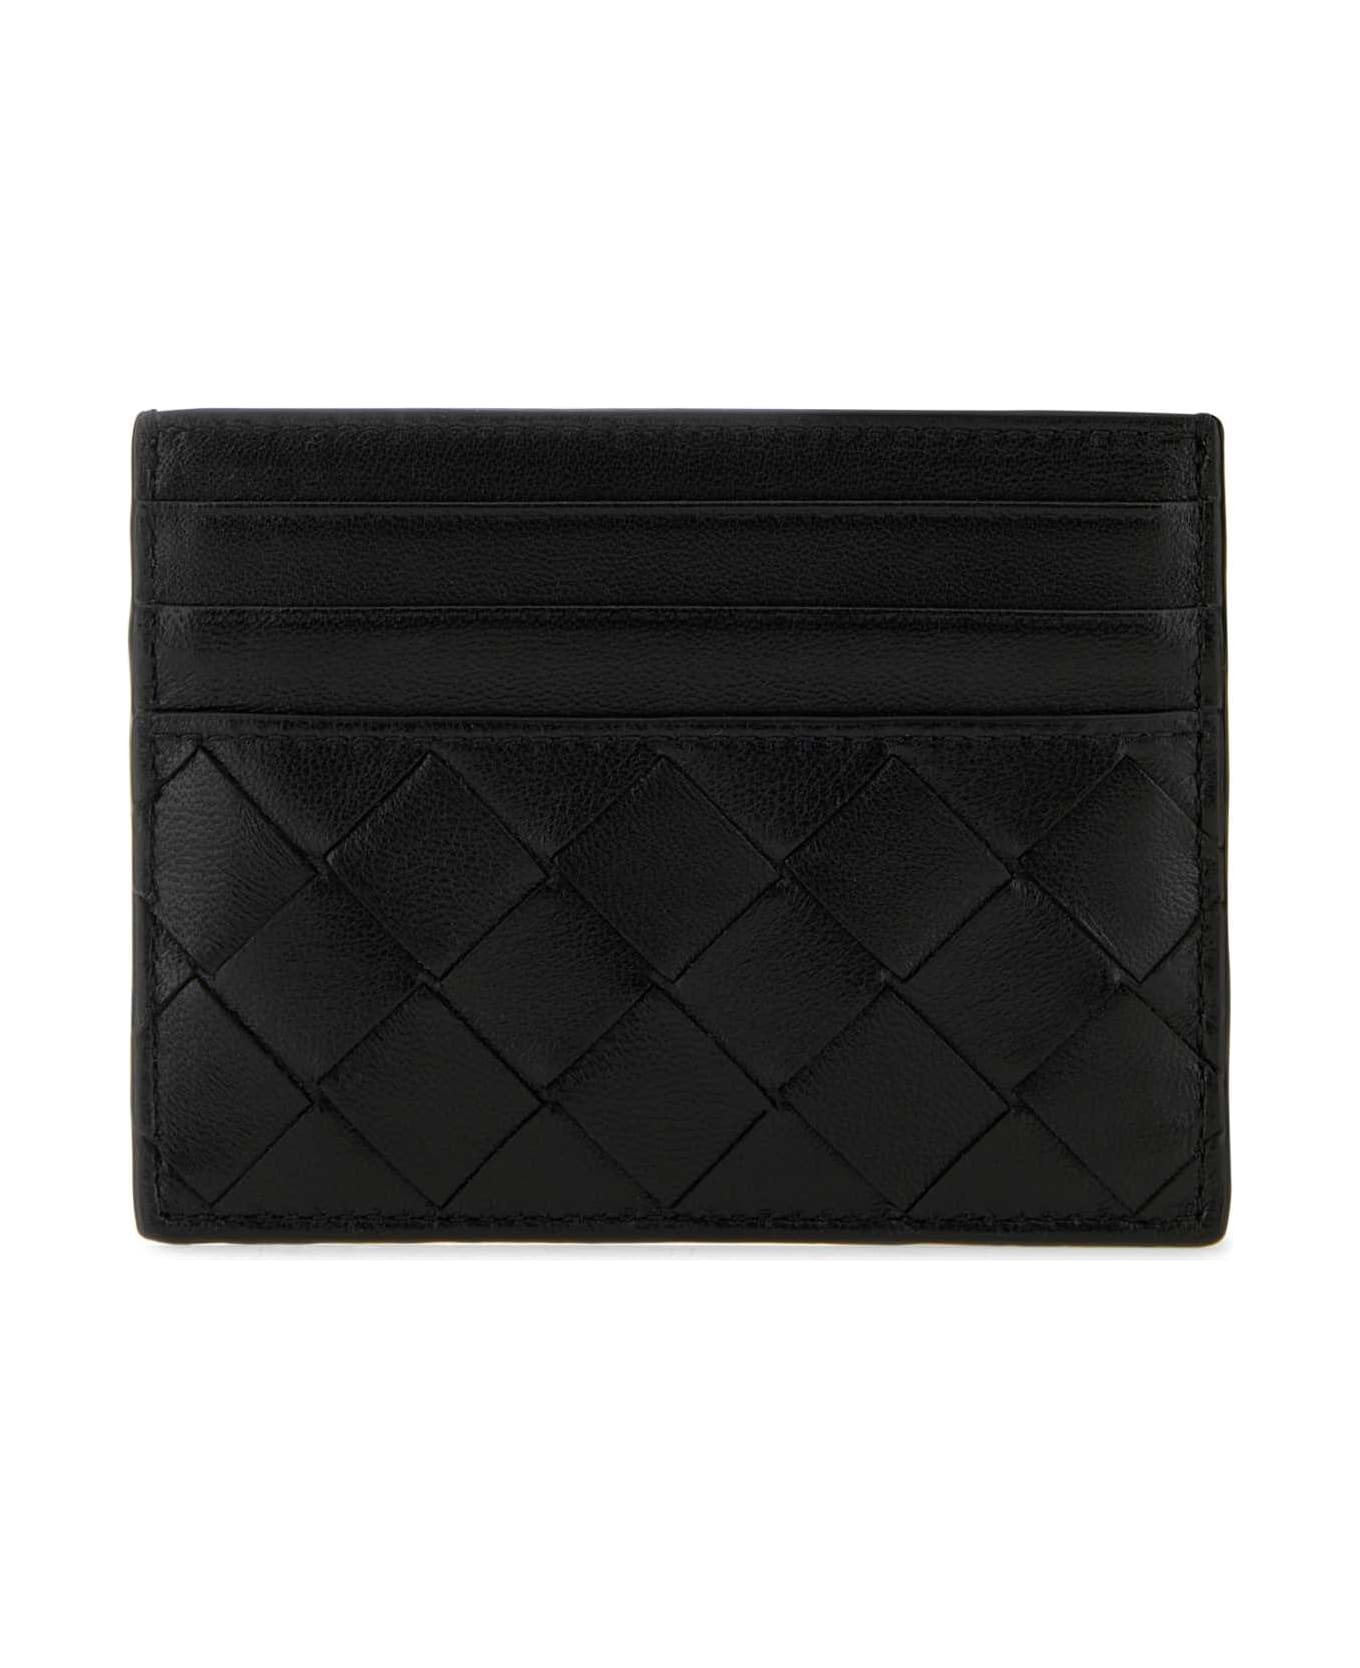 Bottega Veneta Black Leather Card Holder - BLACKGOLD 財布